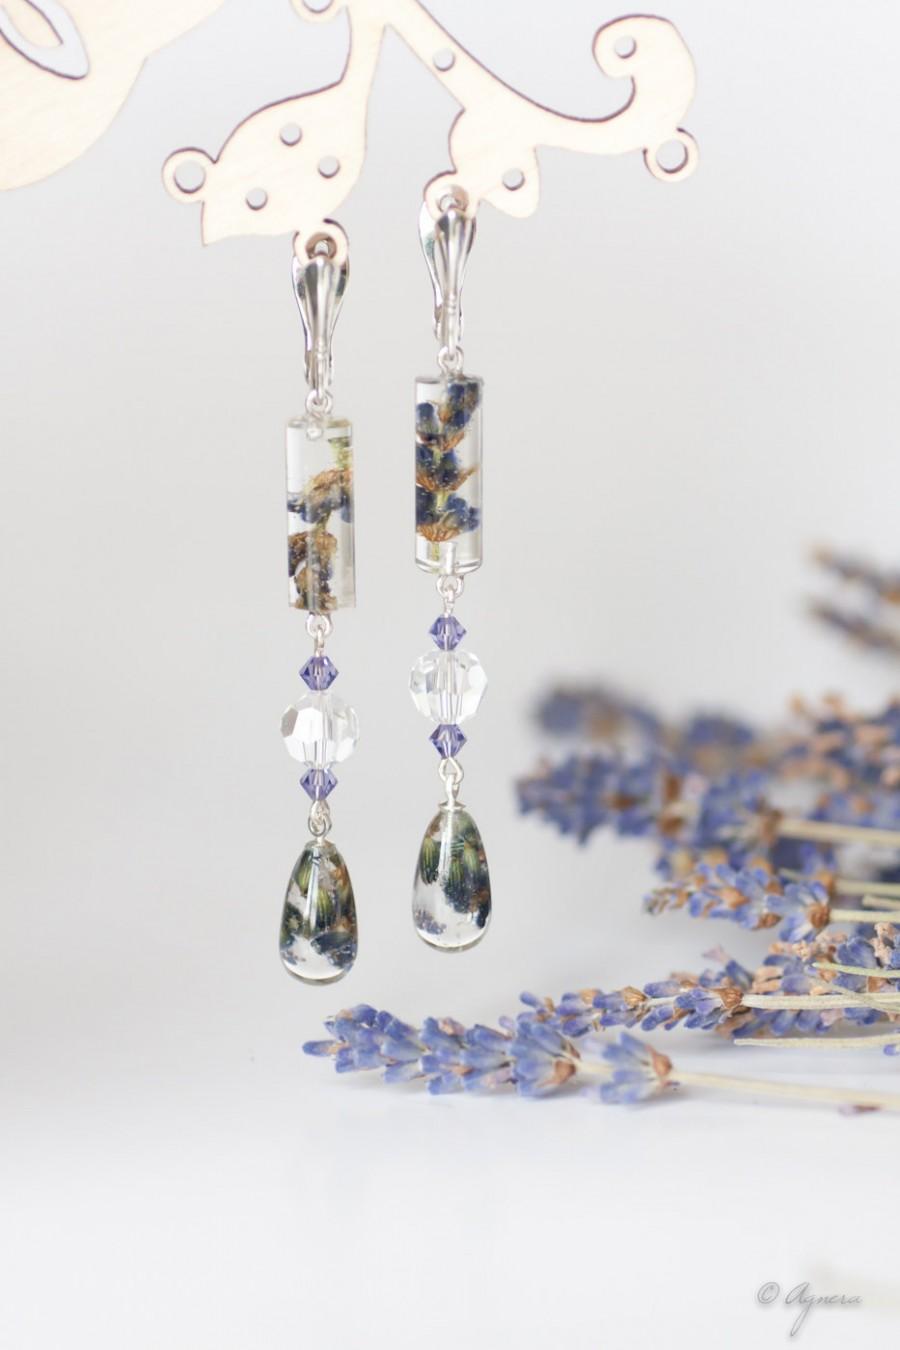 Mariage - Provence Lavender bridal earrings - Lavender earrings - Lavender inspired weddings - Dangle bridal lavender earrings - Real lavender earring